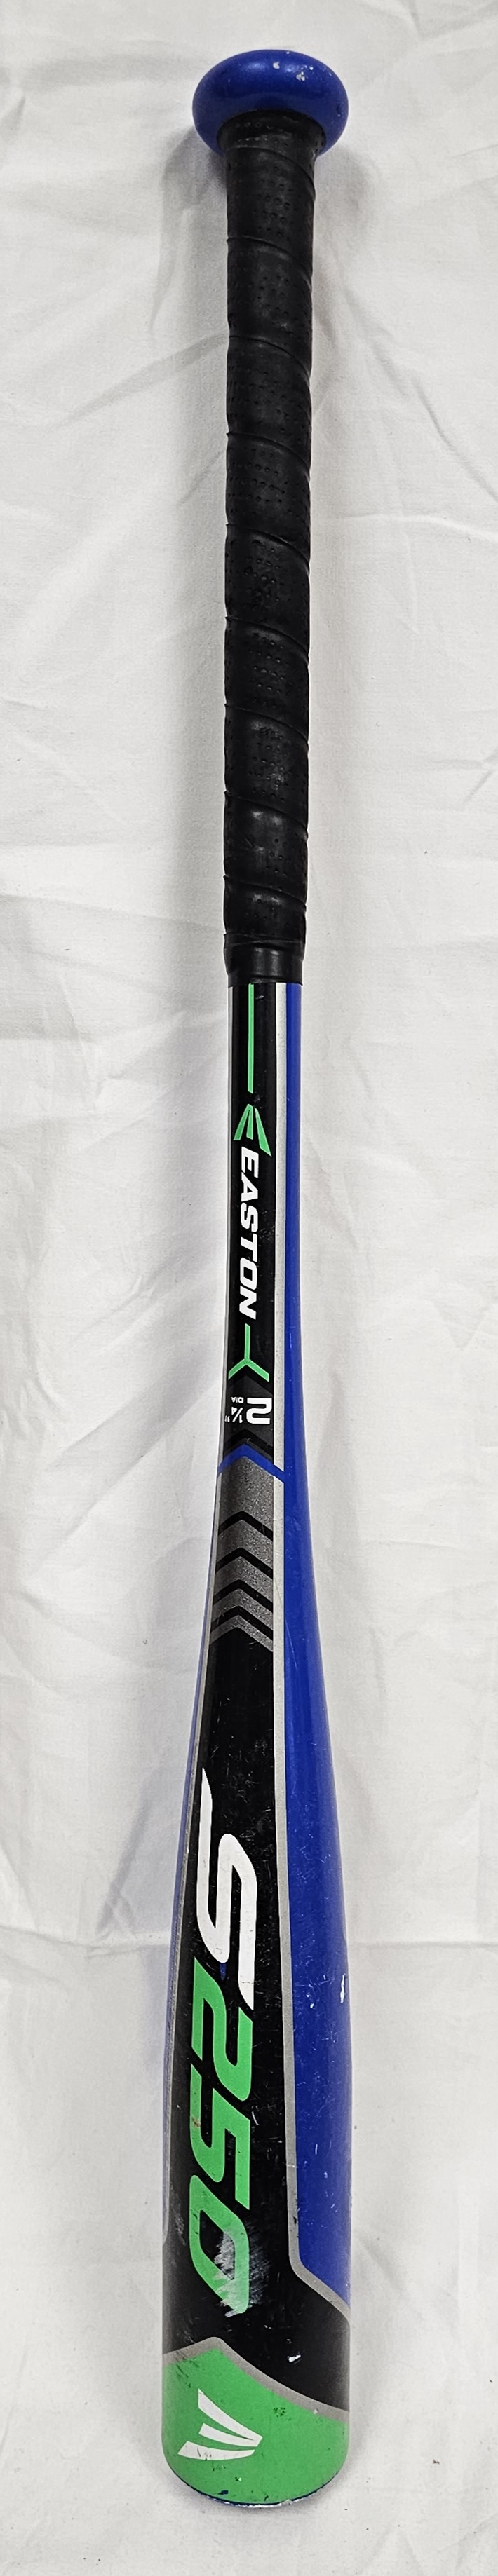 Easton S250 USA Baseball Bat (-10), Size: 27 17oz, Pre-owned